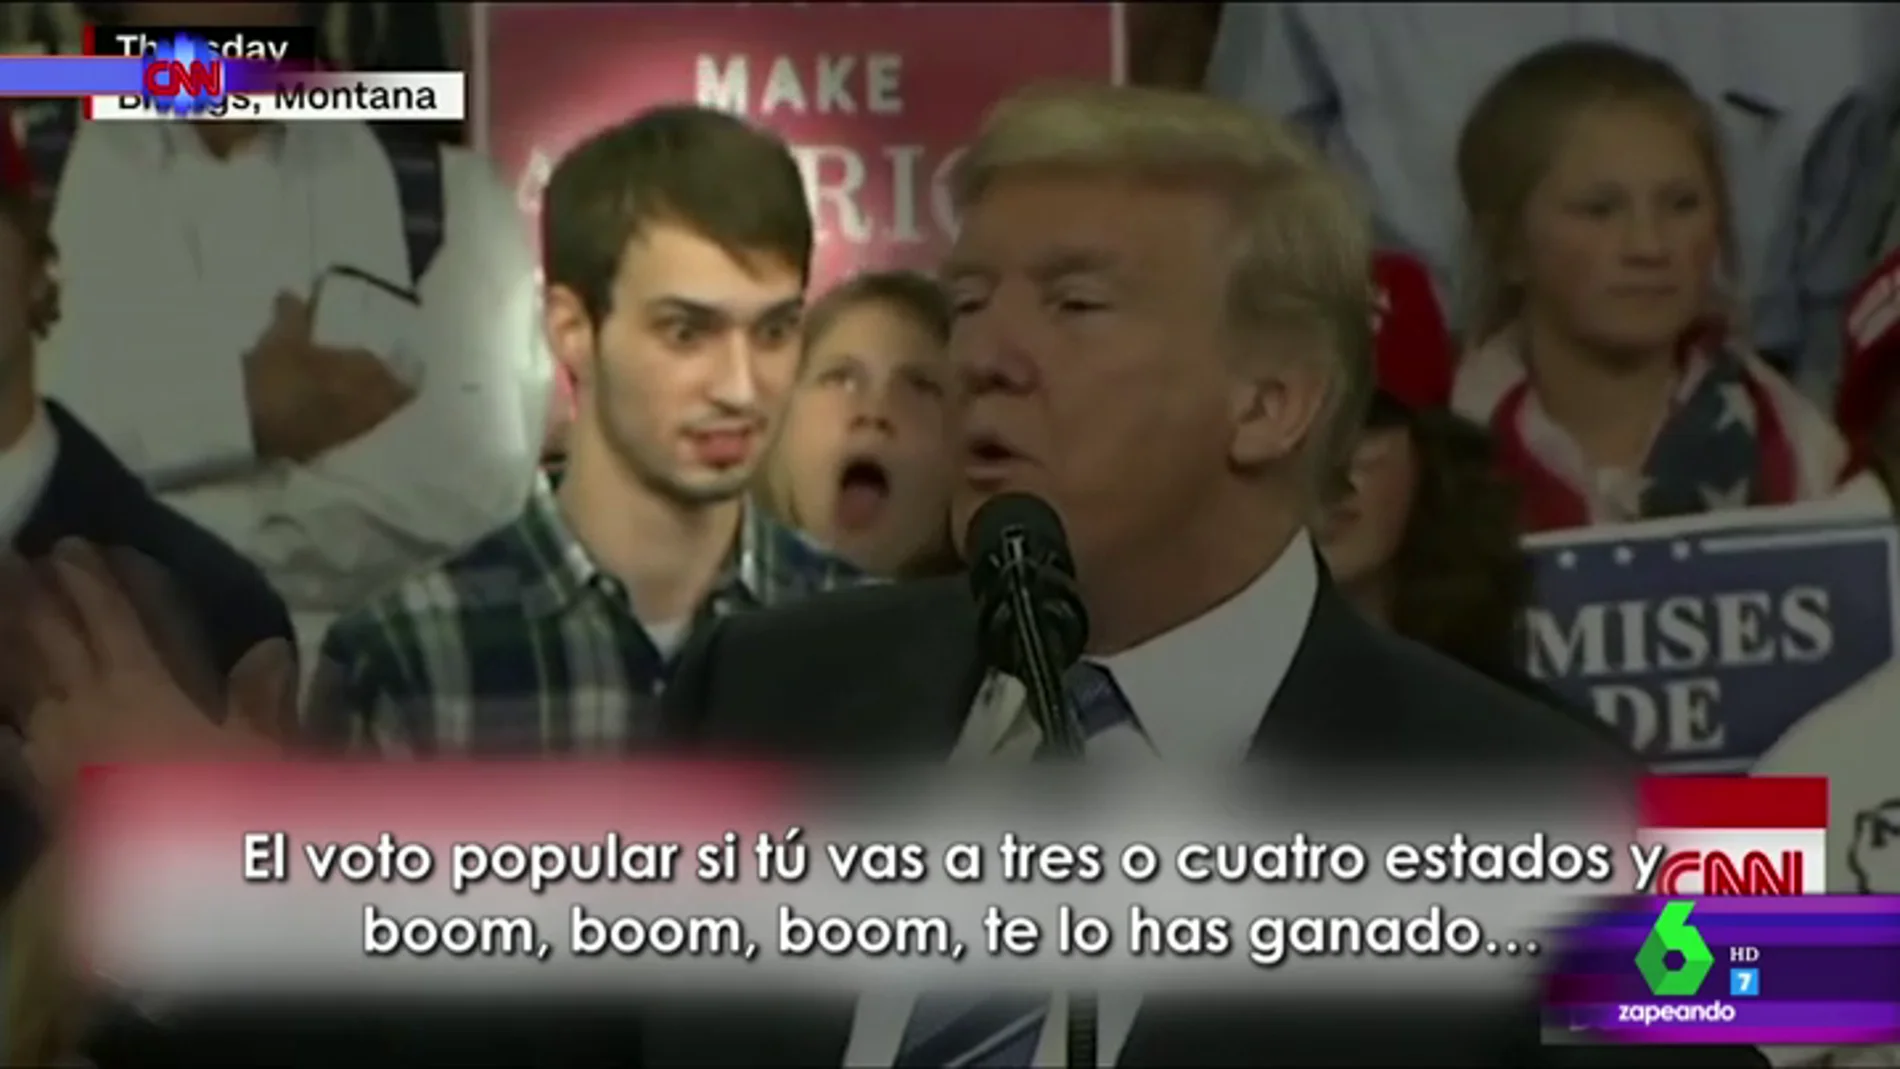 El joven no deja de poner caras detrás de Trump